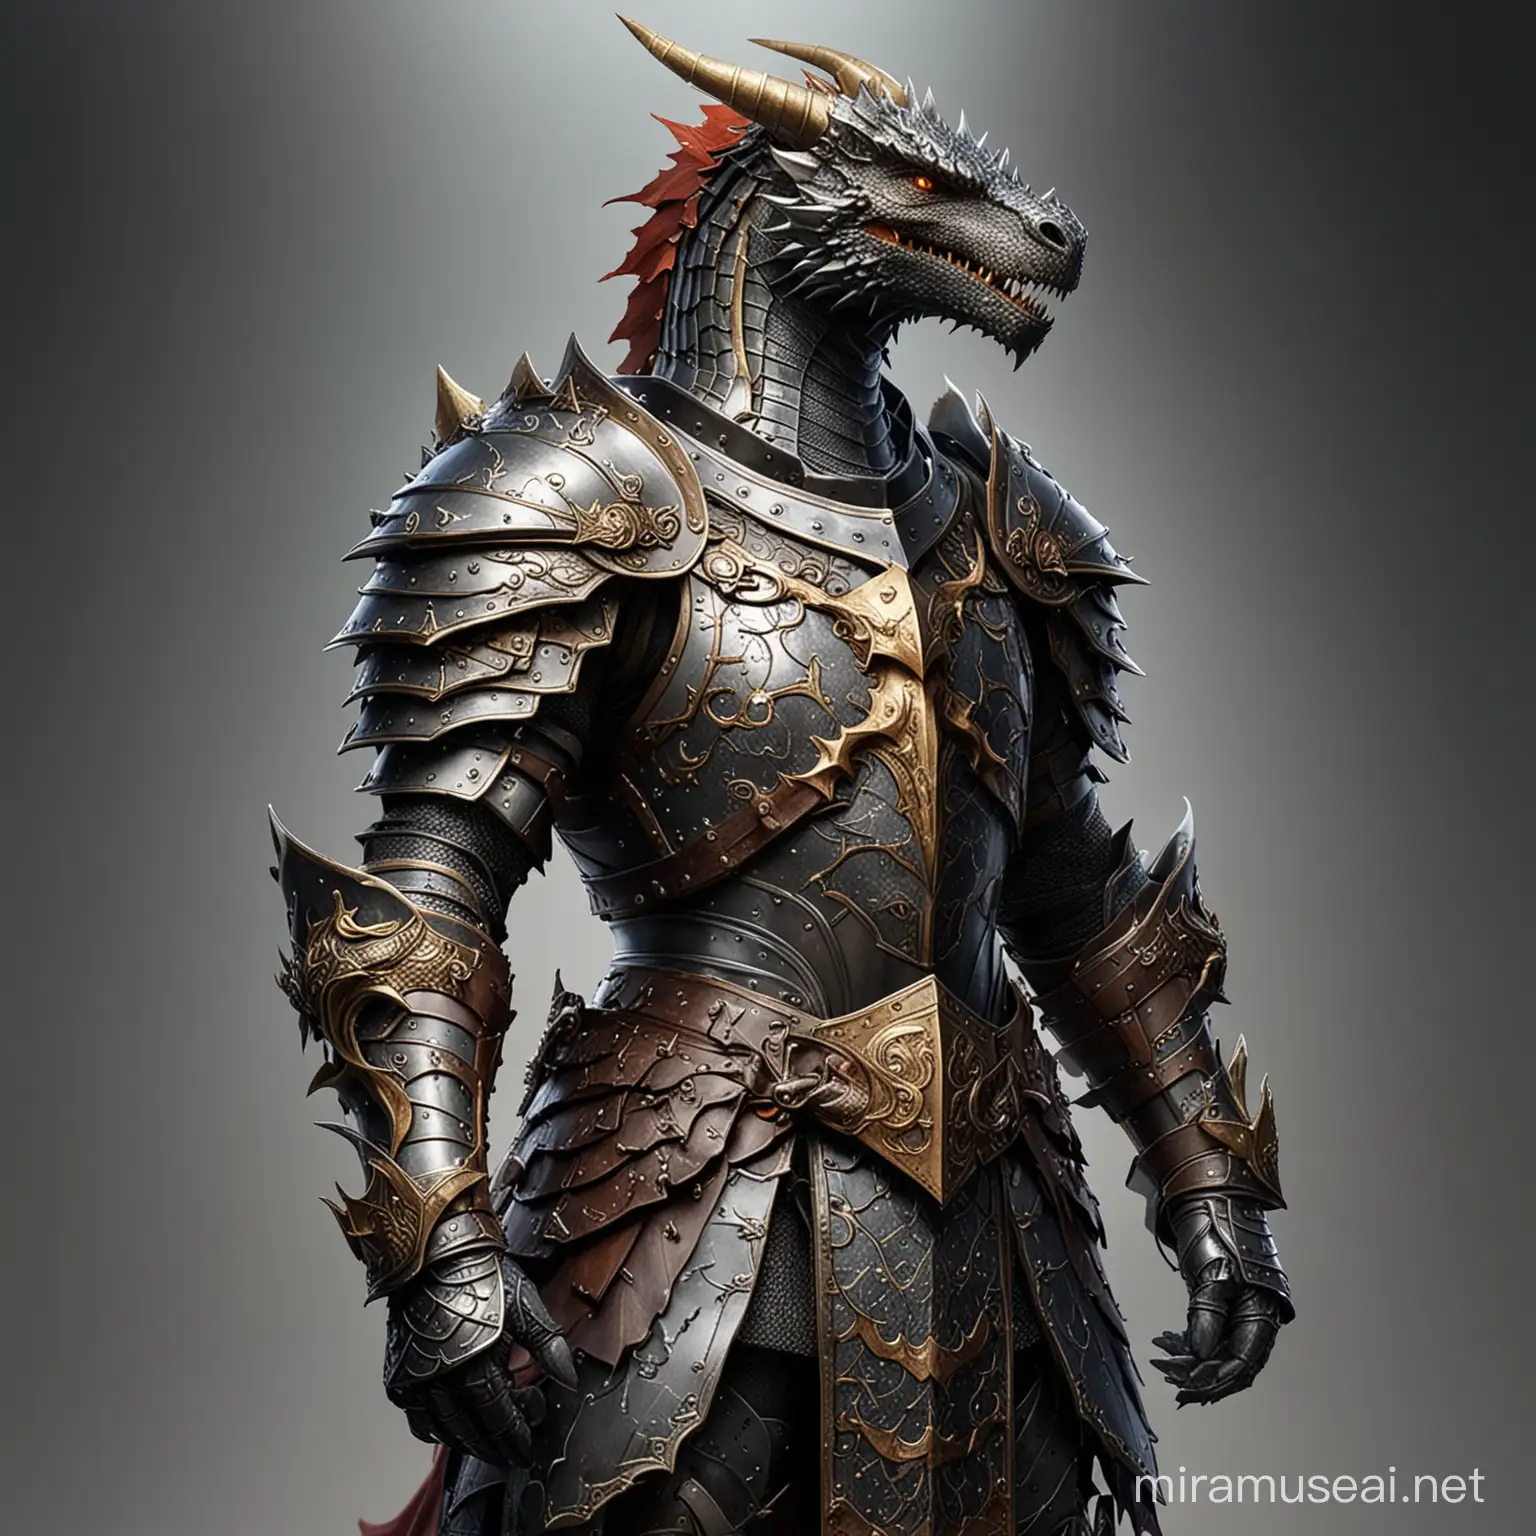 Knight in Dragon Themed Armor Battling Fiery Serpent